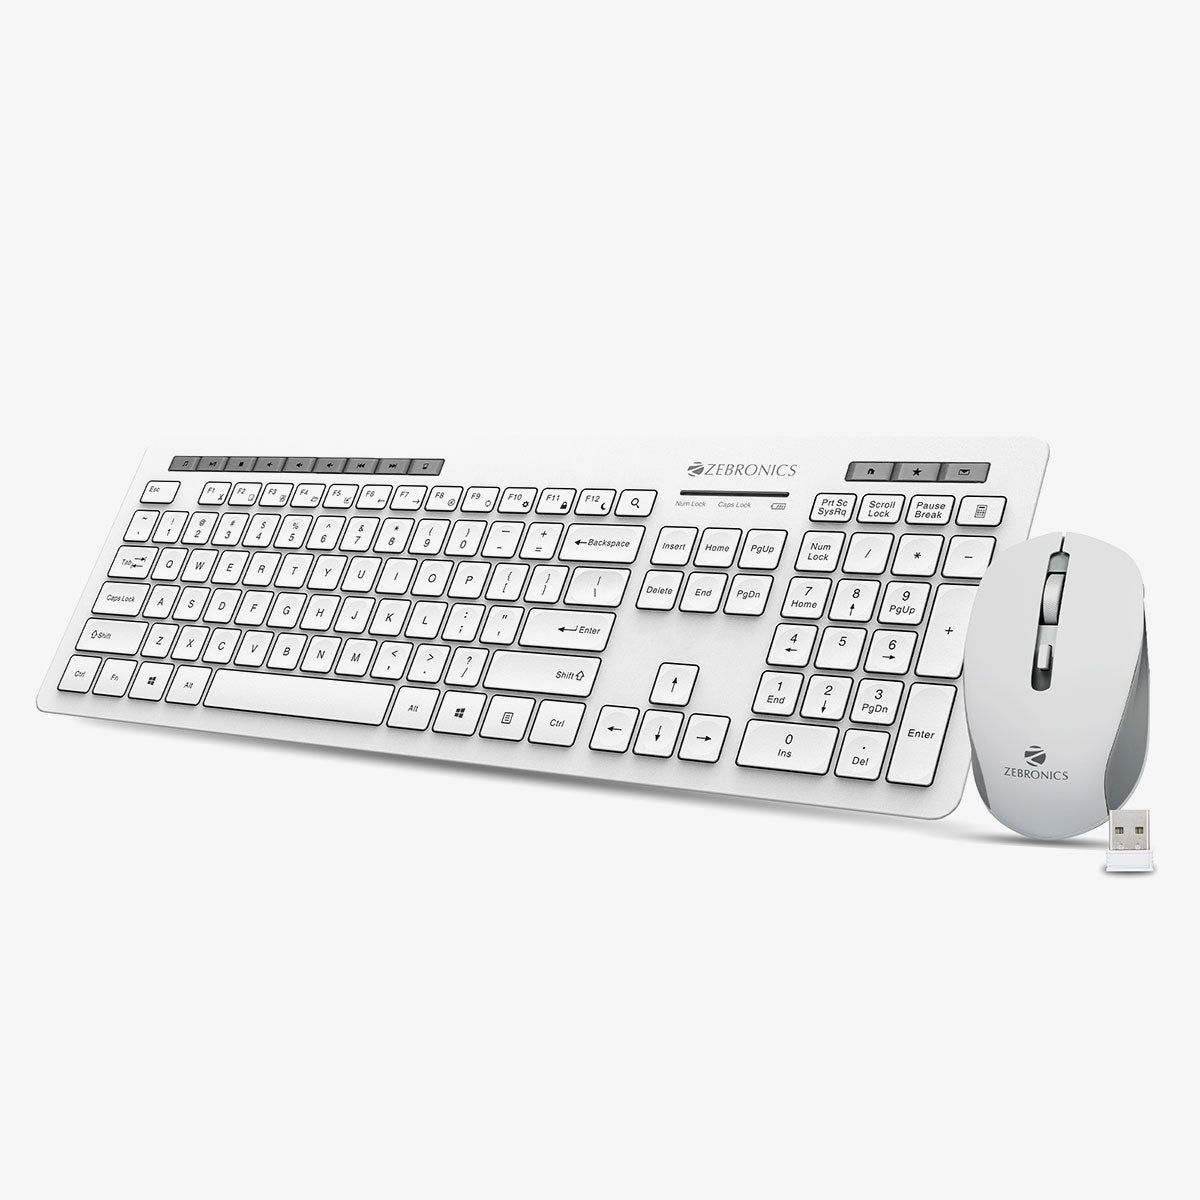 Zeb-Companion 500 - Keyboard and Mouse Combo - Zebronics